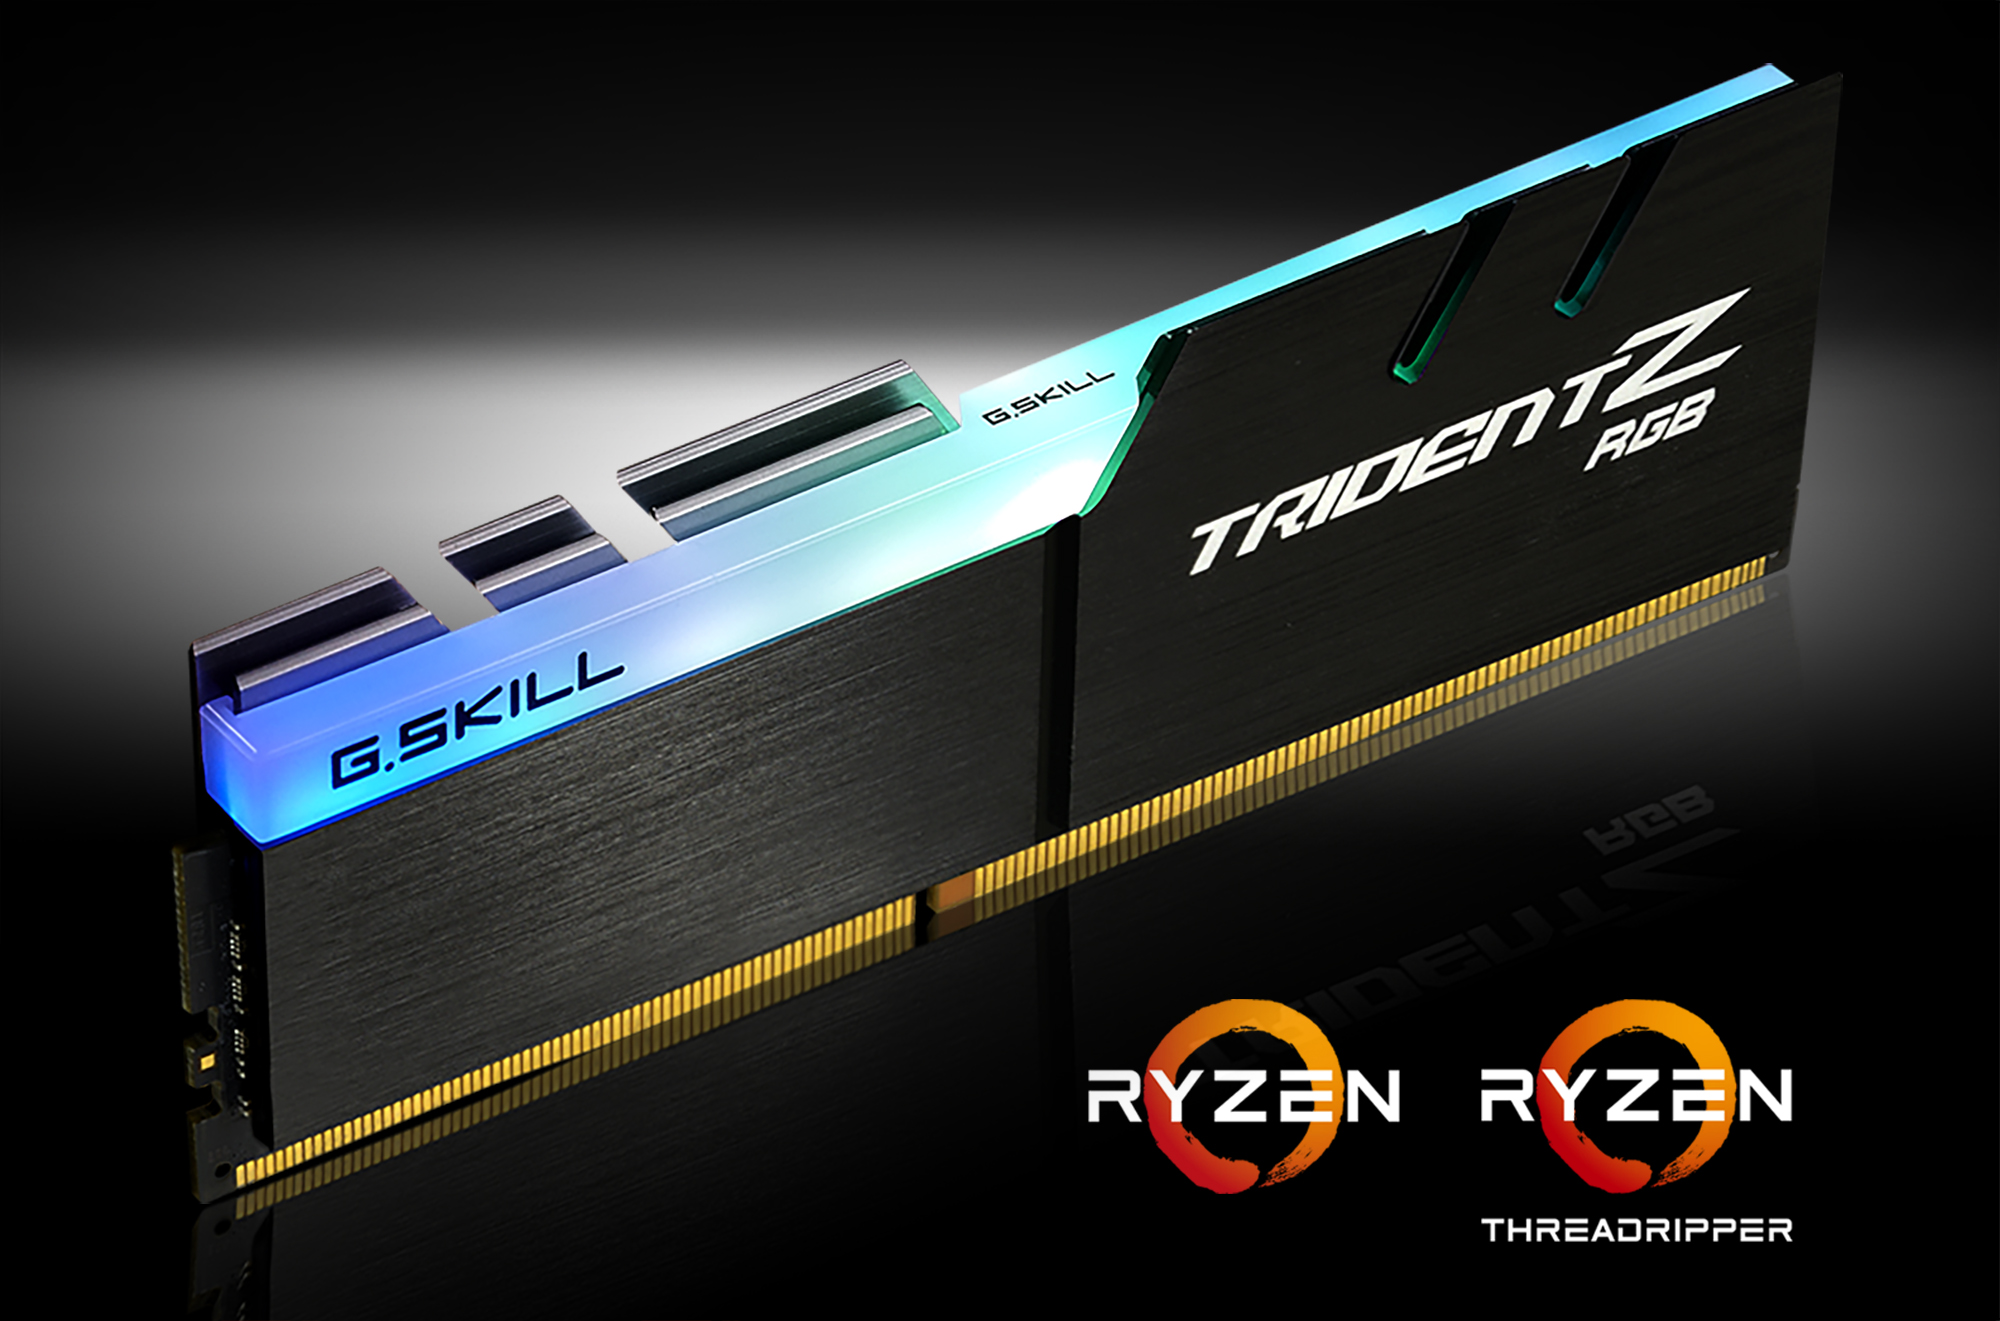 01 tzrx foramd G.SKILL เปิดตัวแรมรุ่นใหม่ Trident Z RGB TZRX ที่รองรับการทำงานของ AMD Ryzen และ Ryzen Threadripper 